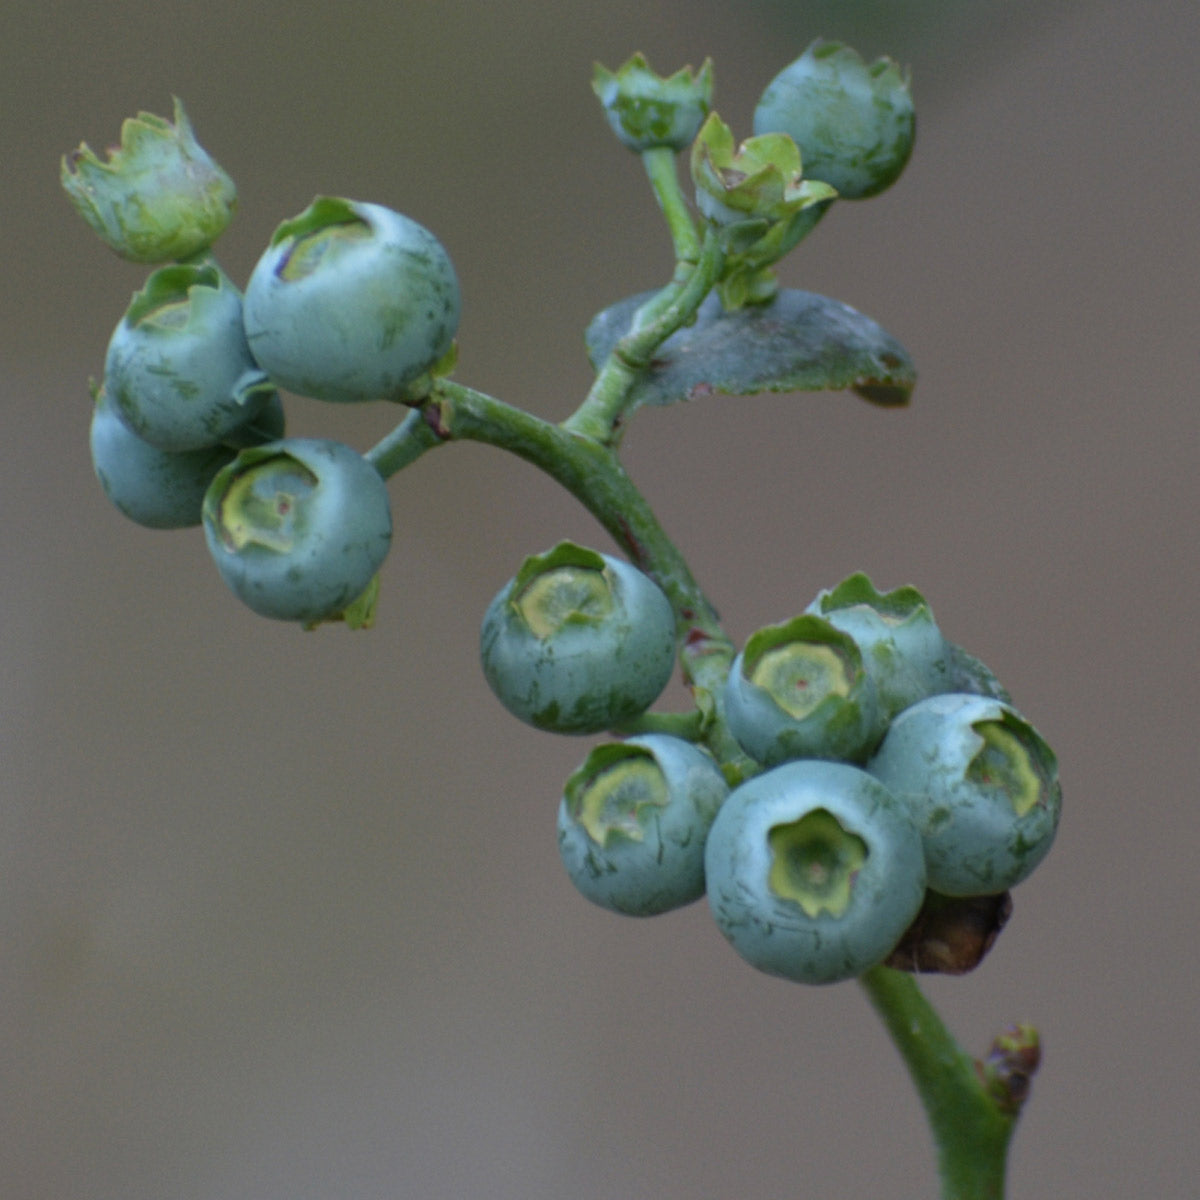 Blueberry Fruit plant (Vaccinium sect. Cyanococcus)